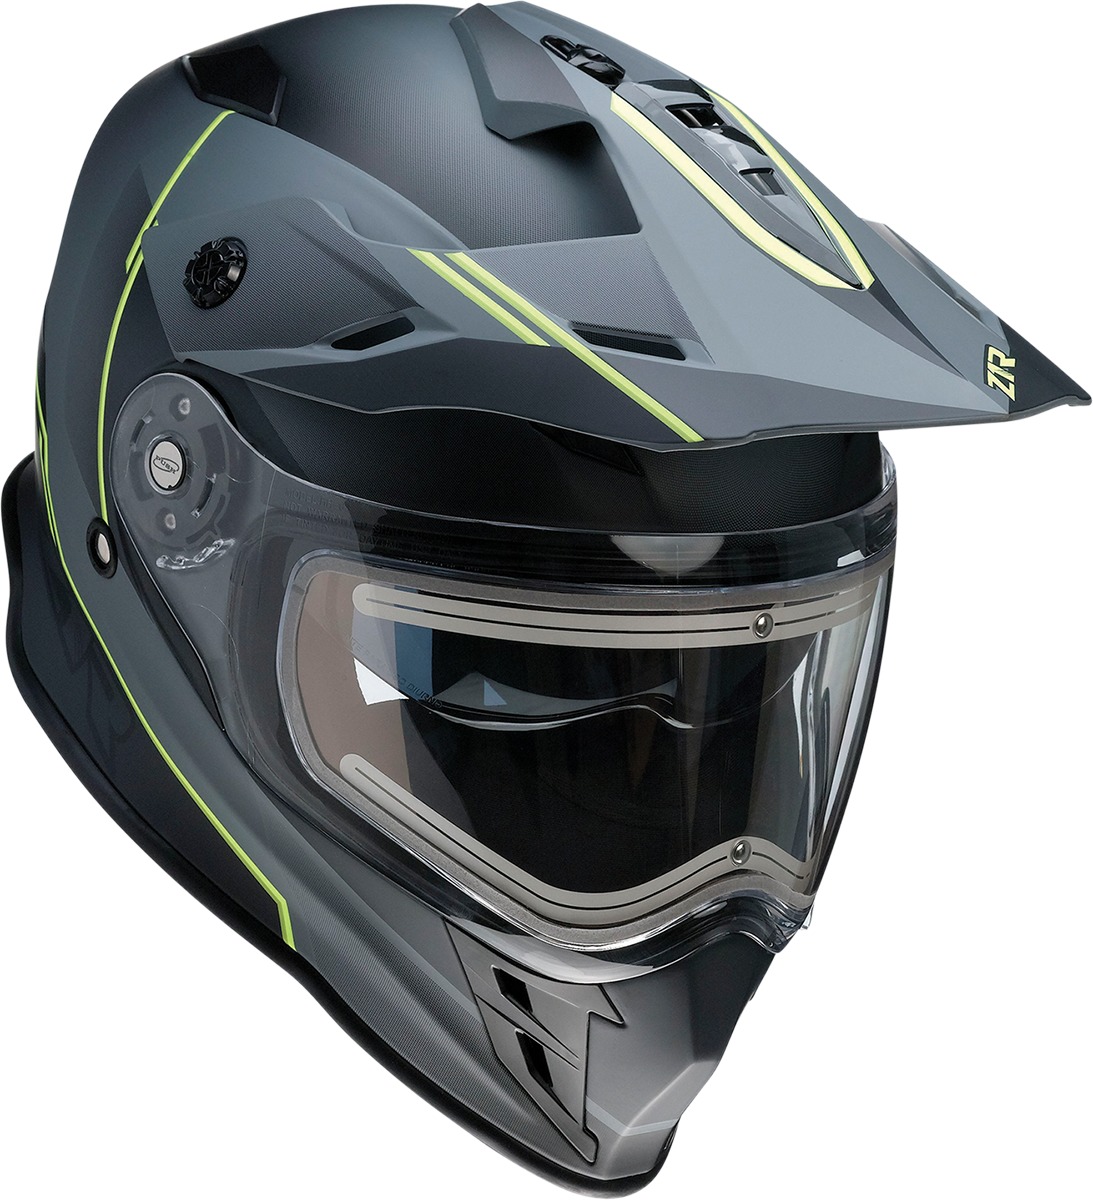 Range Bladestorm Dual-Sport Snow Helmet Large - Gray/Black/Yellow - Click Image to Close